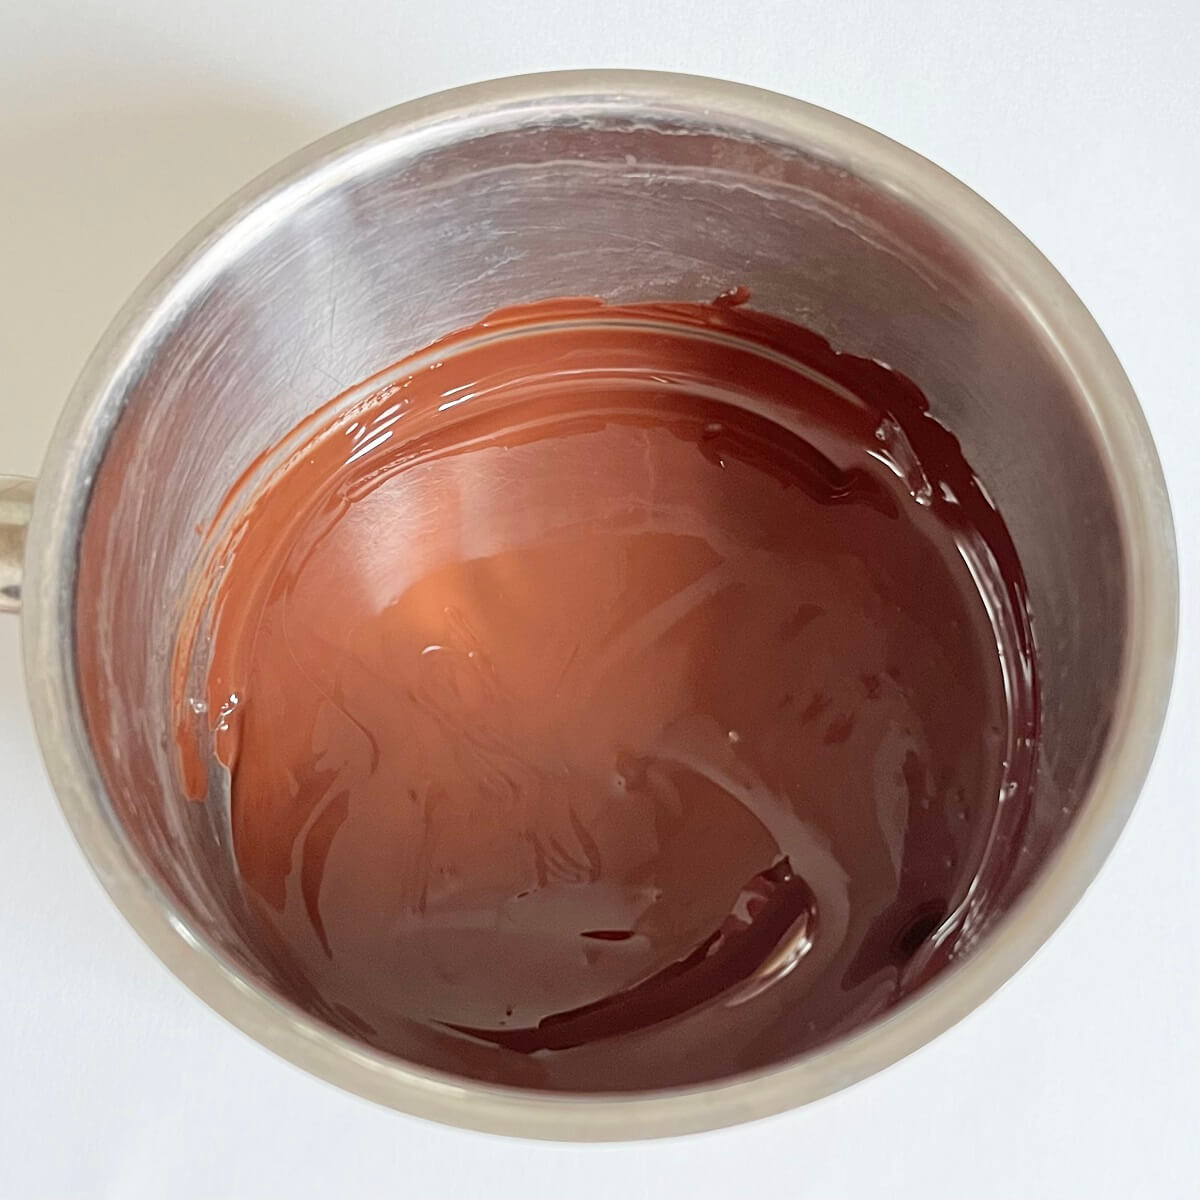 Dark chocolate melting in a steel pot.